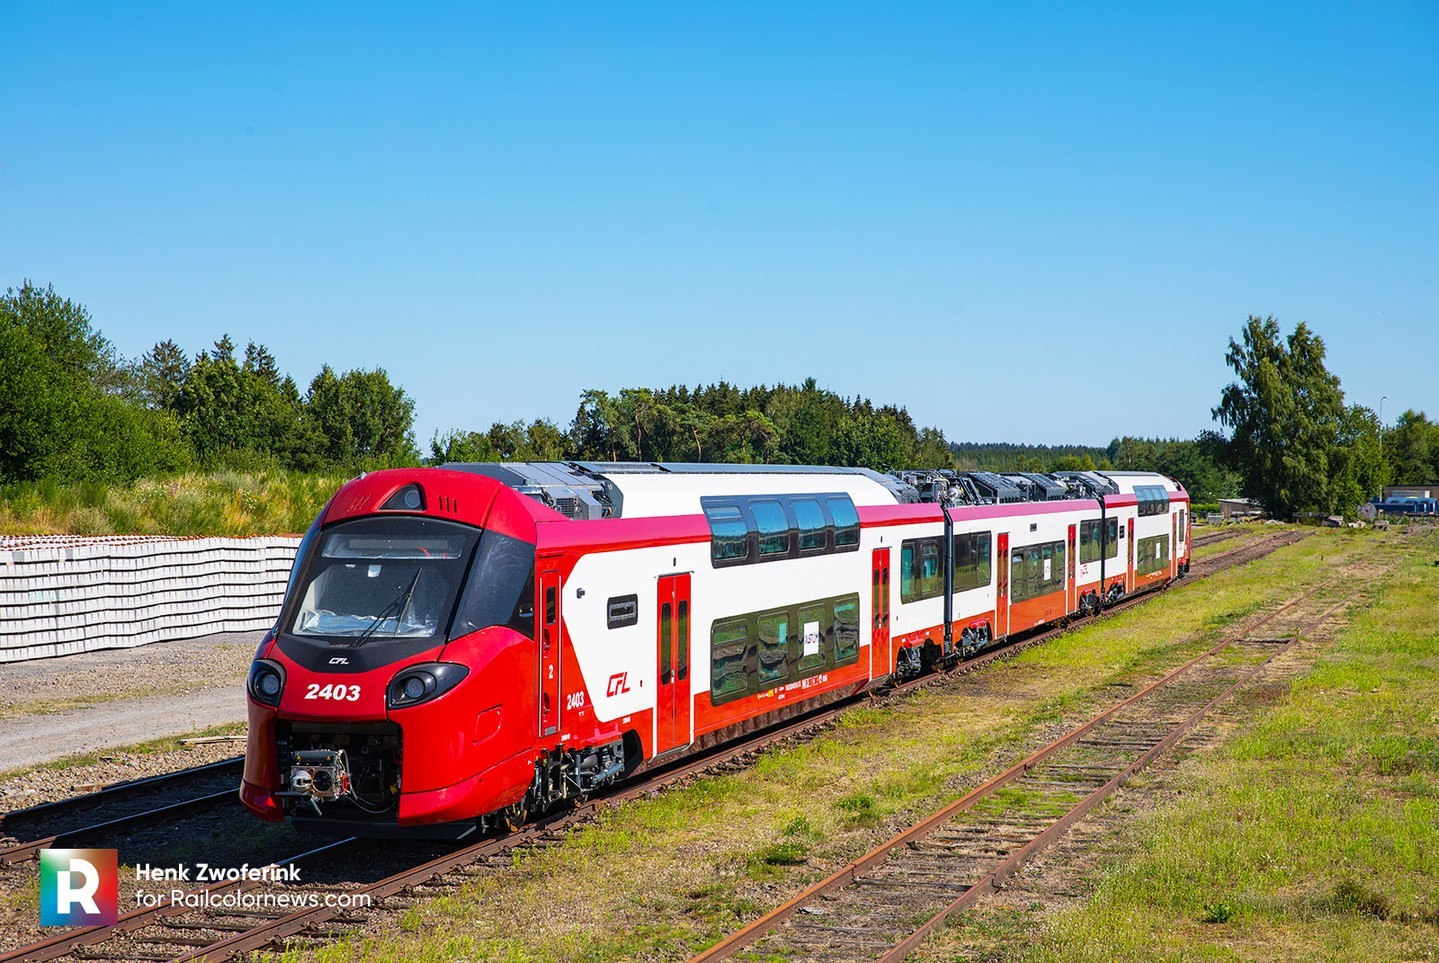 📸 by Henk Zwoferink 🇱🇺 The Coradia Streams HC units for CFL ⬆️ More photos on RailcolorNews.com
.
.
.
.
#alstom #coradia #alstomcoradia #AlstomCoradiaStreamHC #CoradiaStreamHC #CFL #CFLCoradia #2403 #eisenbahnfotografie #railwayphotography #railways #railways_of_germany #railcolornews #railcolornewsexpert #trainsineurope #trainstagram #bahn #neuezuge #newtrains #instatrain #chemindefer #chemindeferluxembourgeois #cheminsdeferluxembourgeois #railroadfan #trainelectrique #emu #spoorwegen #treinspotter